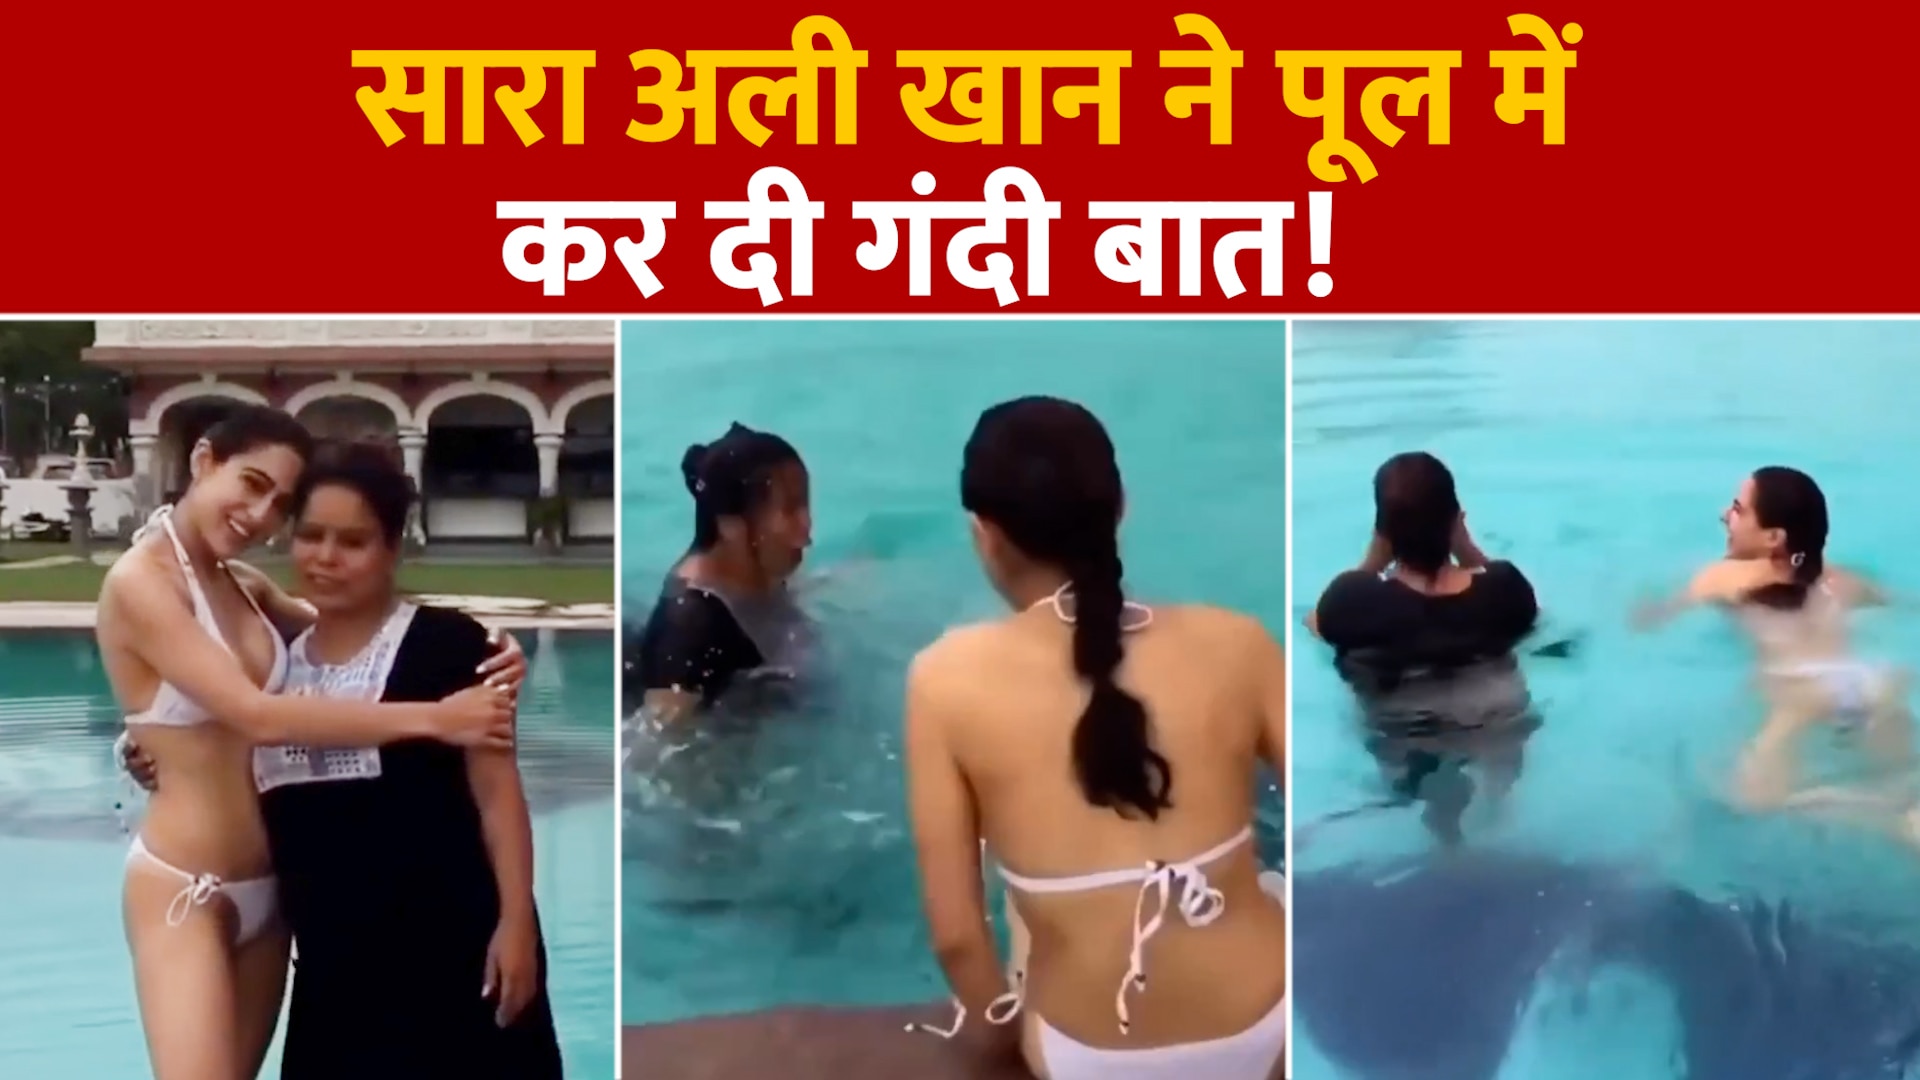 Sara Ali Khan Pron - Sara Ali Khan did prank wearing a bikini in the swimming pool users got  angry | Sara Ali Khan à¤¨à¥‡ à¤¬à¤¿à¤•à¤¿à¤¨à¥€ à¤ªà¤¹à¤¨ à¤¸à¥à¤µà¤¿à¤®à¤¿à¤‚à¤— à¤ªà¥‚à¤² à¤®à¥‡à¤‚ à¤•à¤¿à¤¯à¤¾ à¤à¤¸à¤¾ à¤ªà¥à¤°à¥ˆà¤‚à¤•,  à¤¯à¥‚à¤œà¤°à¥à¤¸ à¤•à¥‹ à¤† à¤—à¤